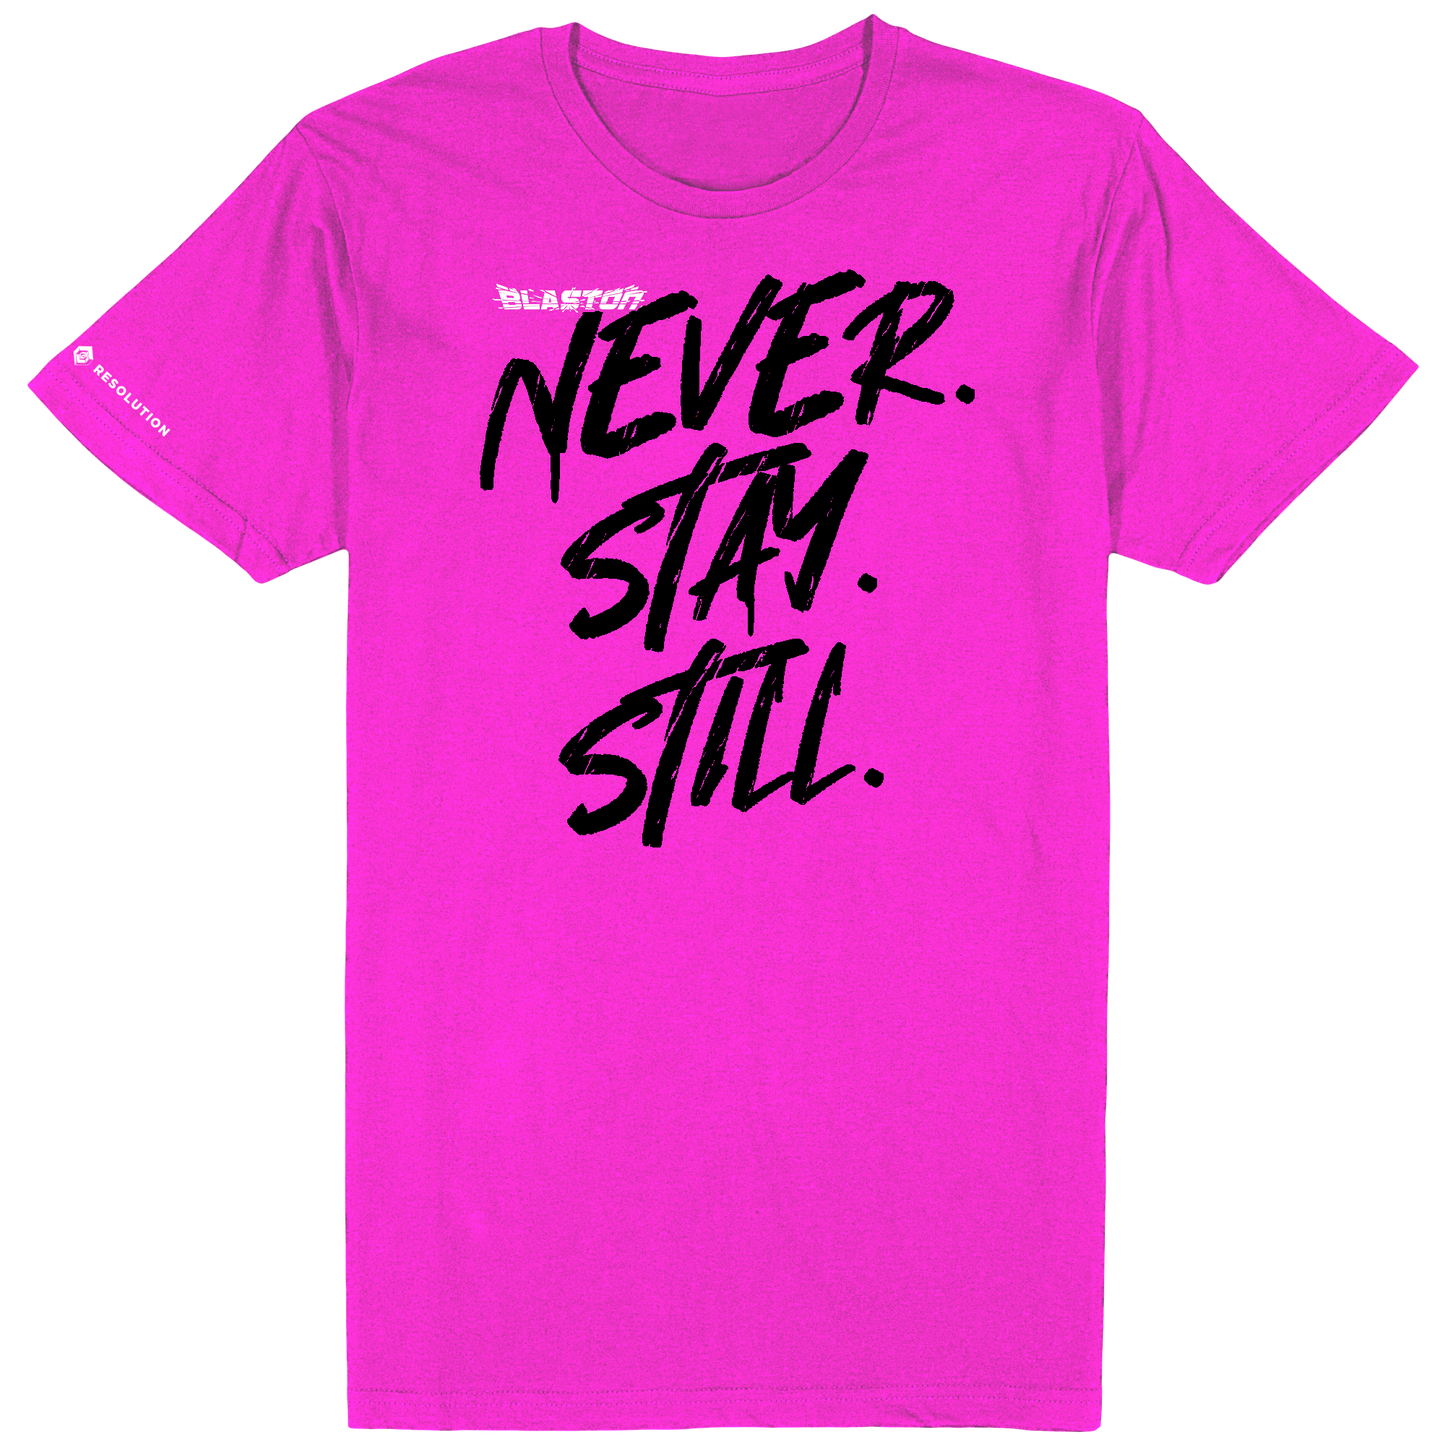 Blaston Never. Stay. Still. Tee - Black/Pink